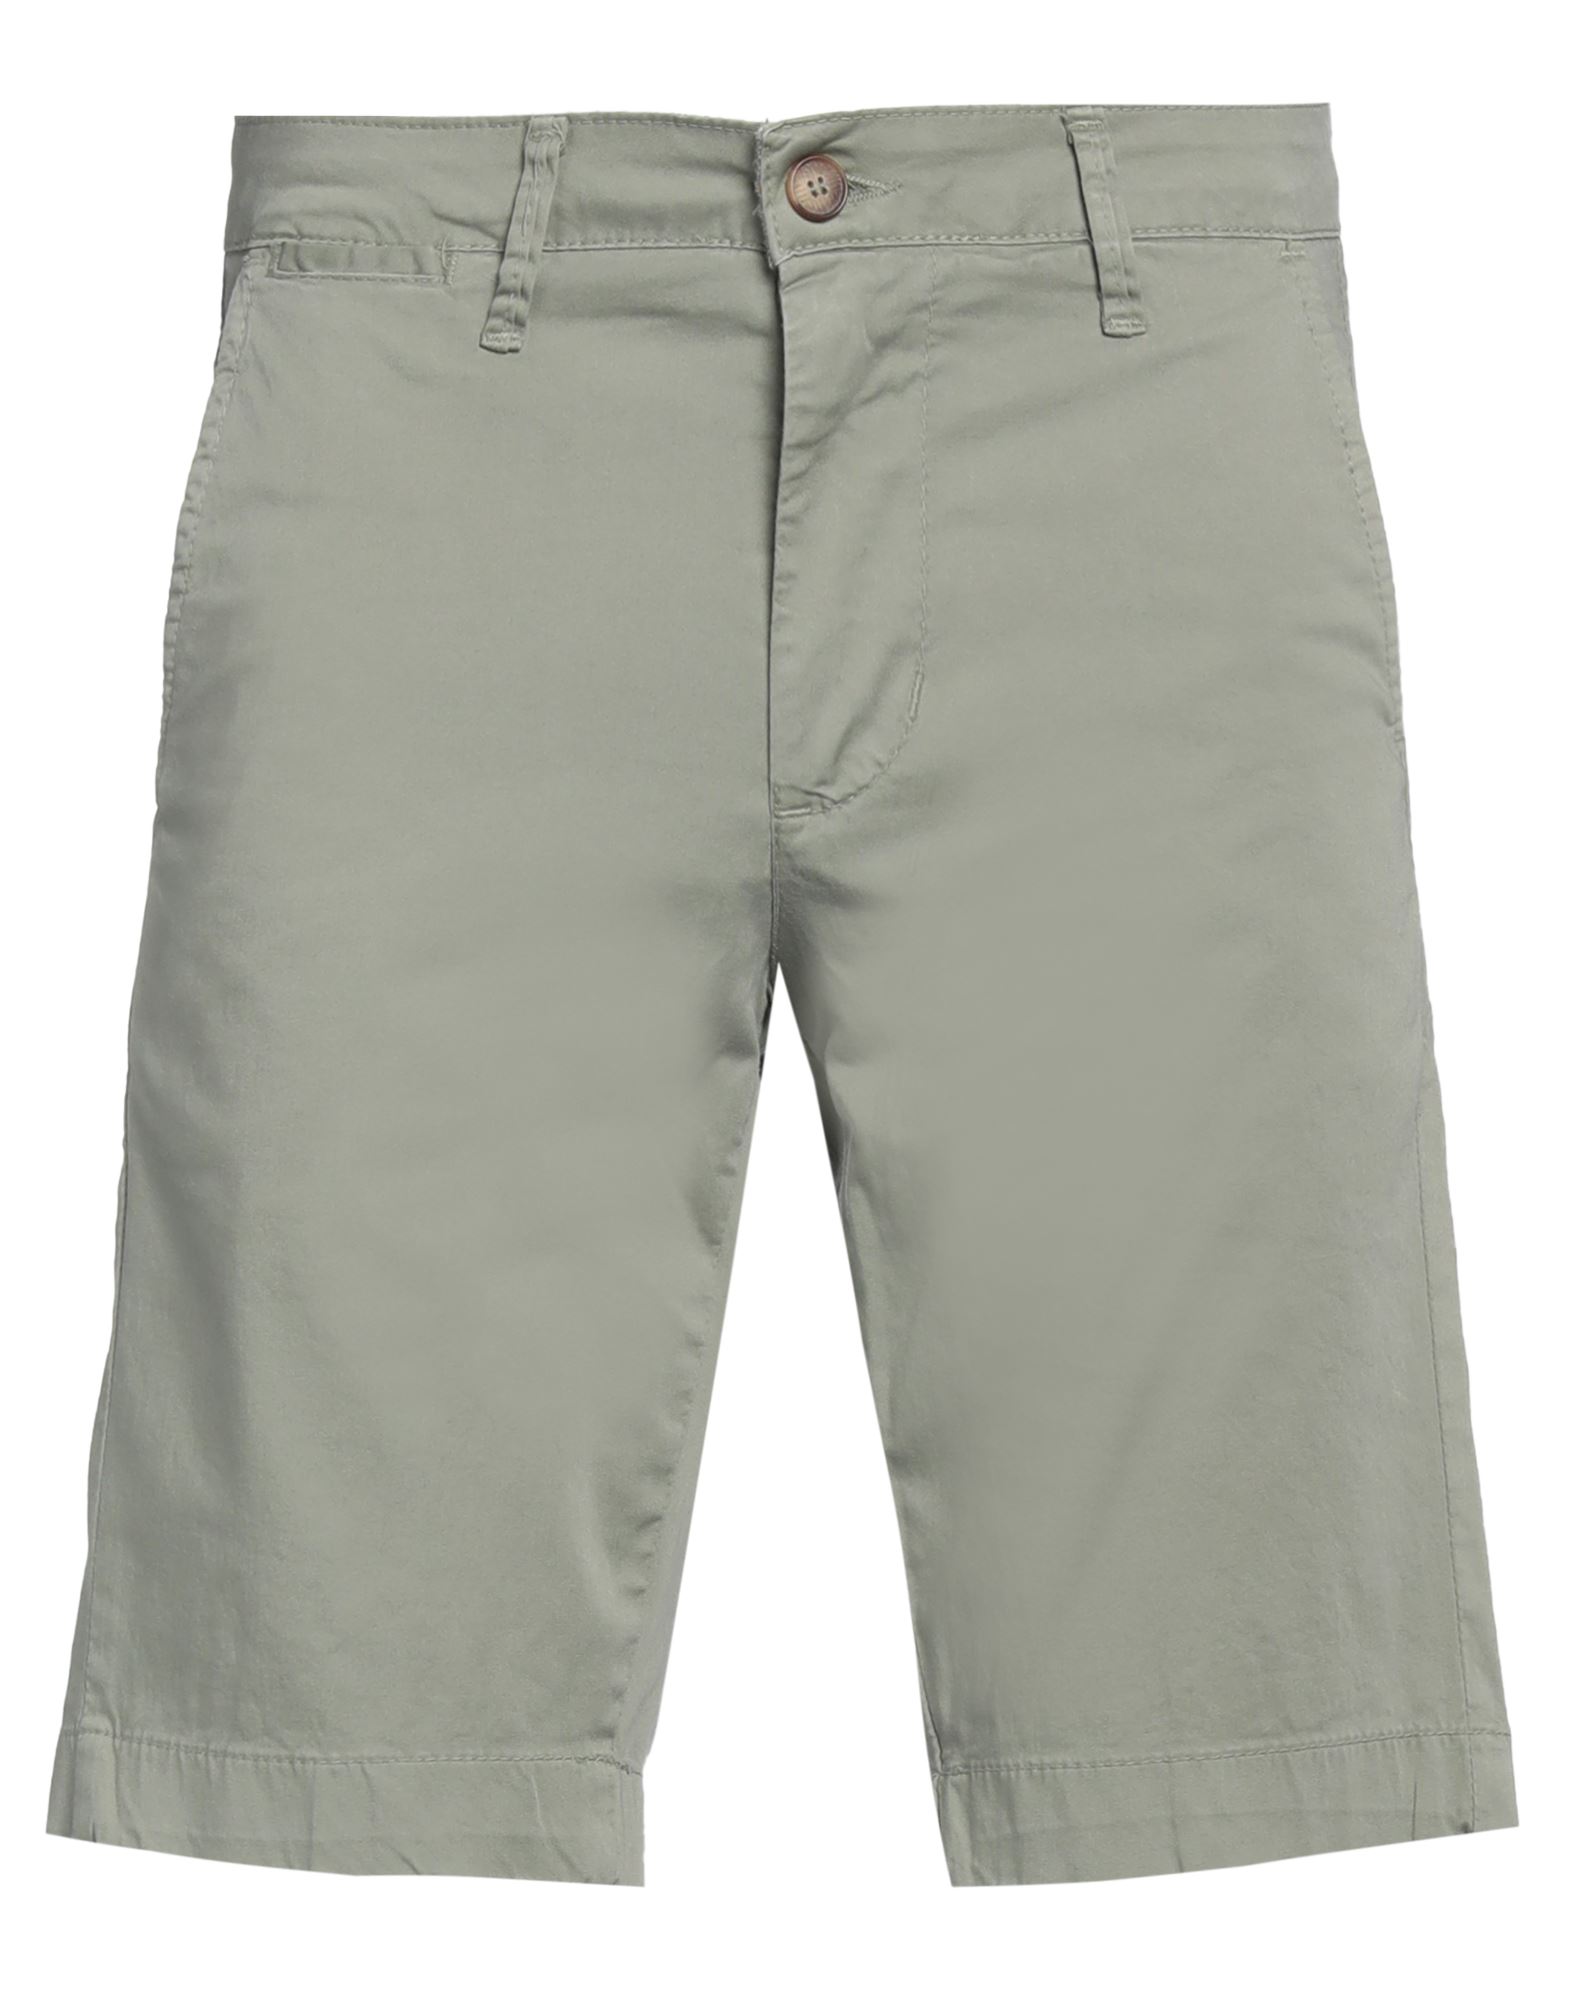 Rar Man Shorts & Bermuda Shorts Sage Green Size 26 Cotton, Elastane